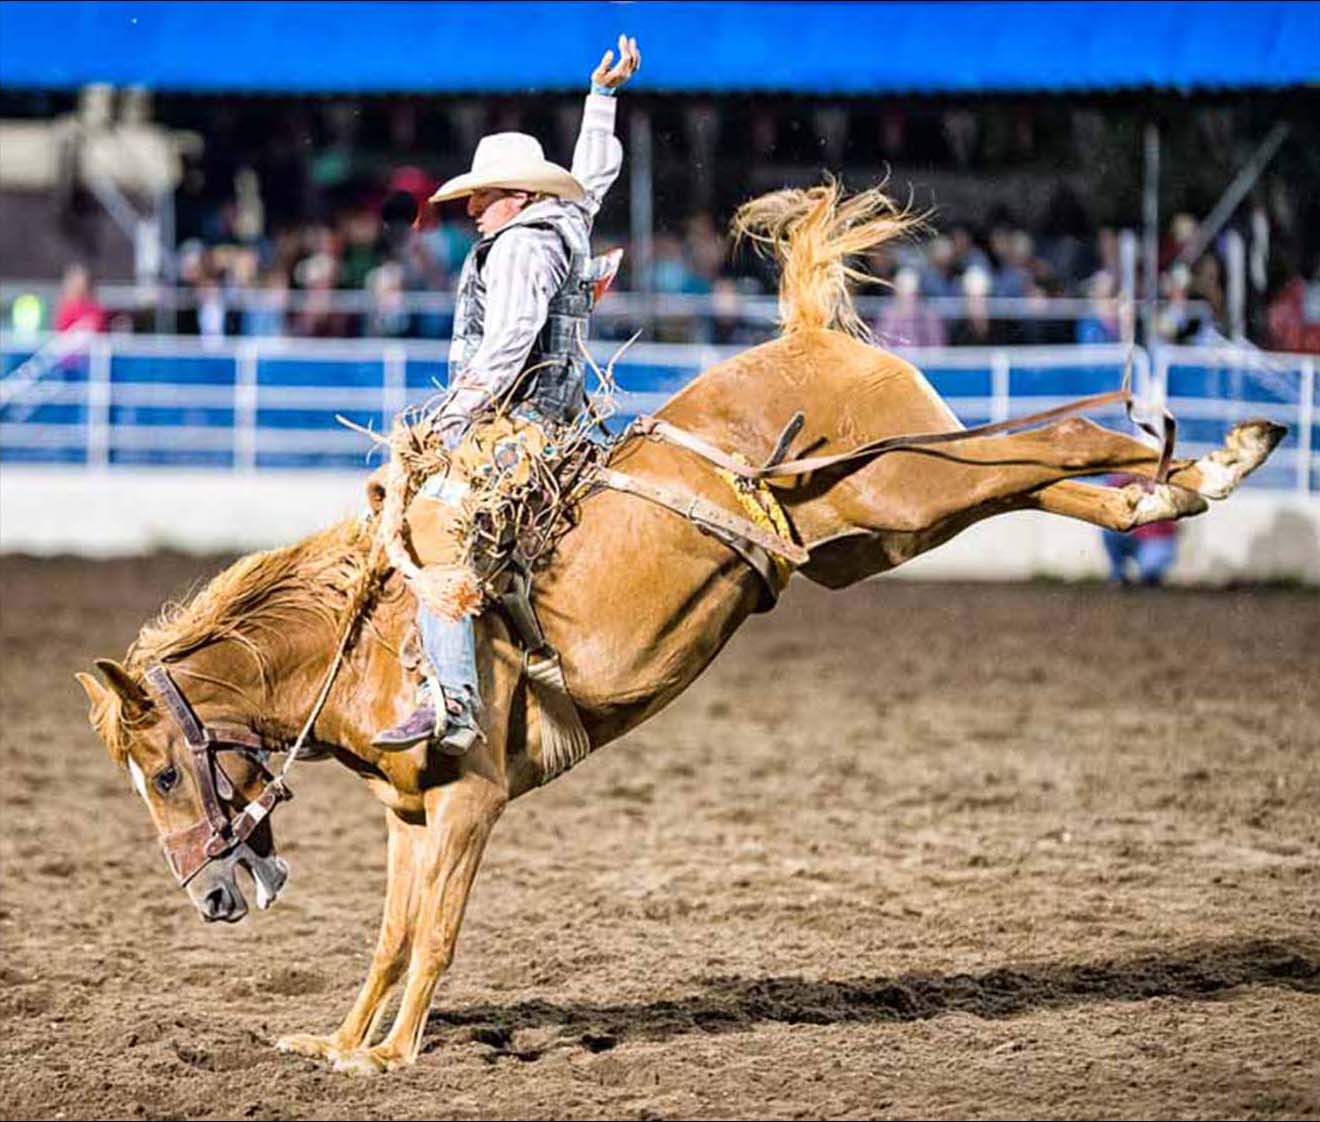 Cowboy rides a Bareback Bucking Bronco by Mark Ruckman